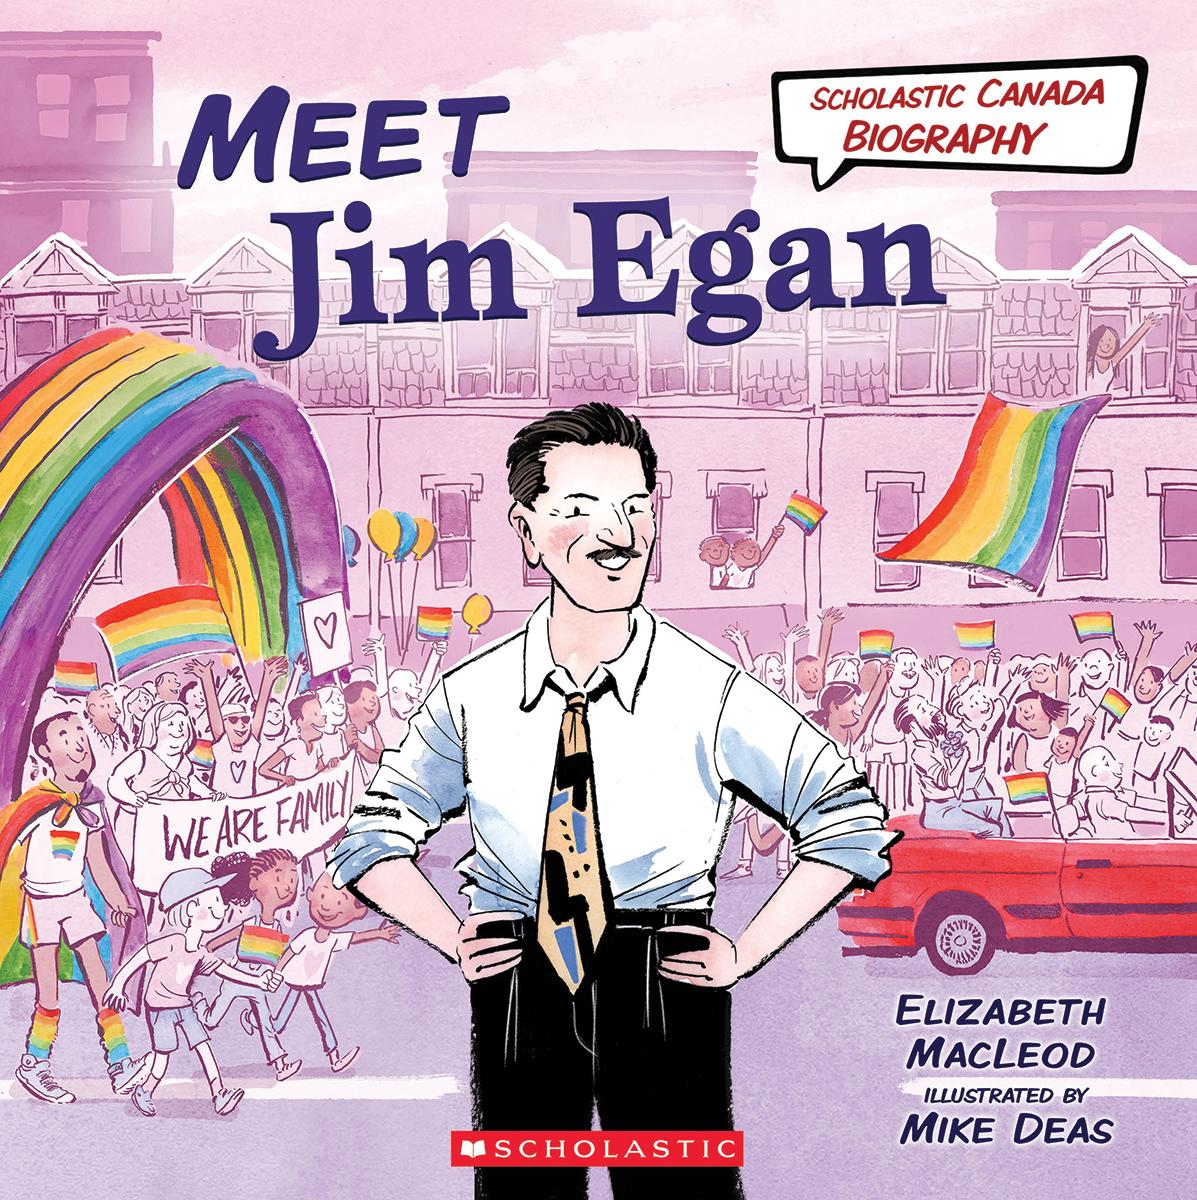  Scholastic Canada Biography: Meet Jim Egan. 